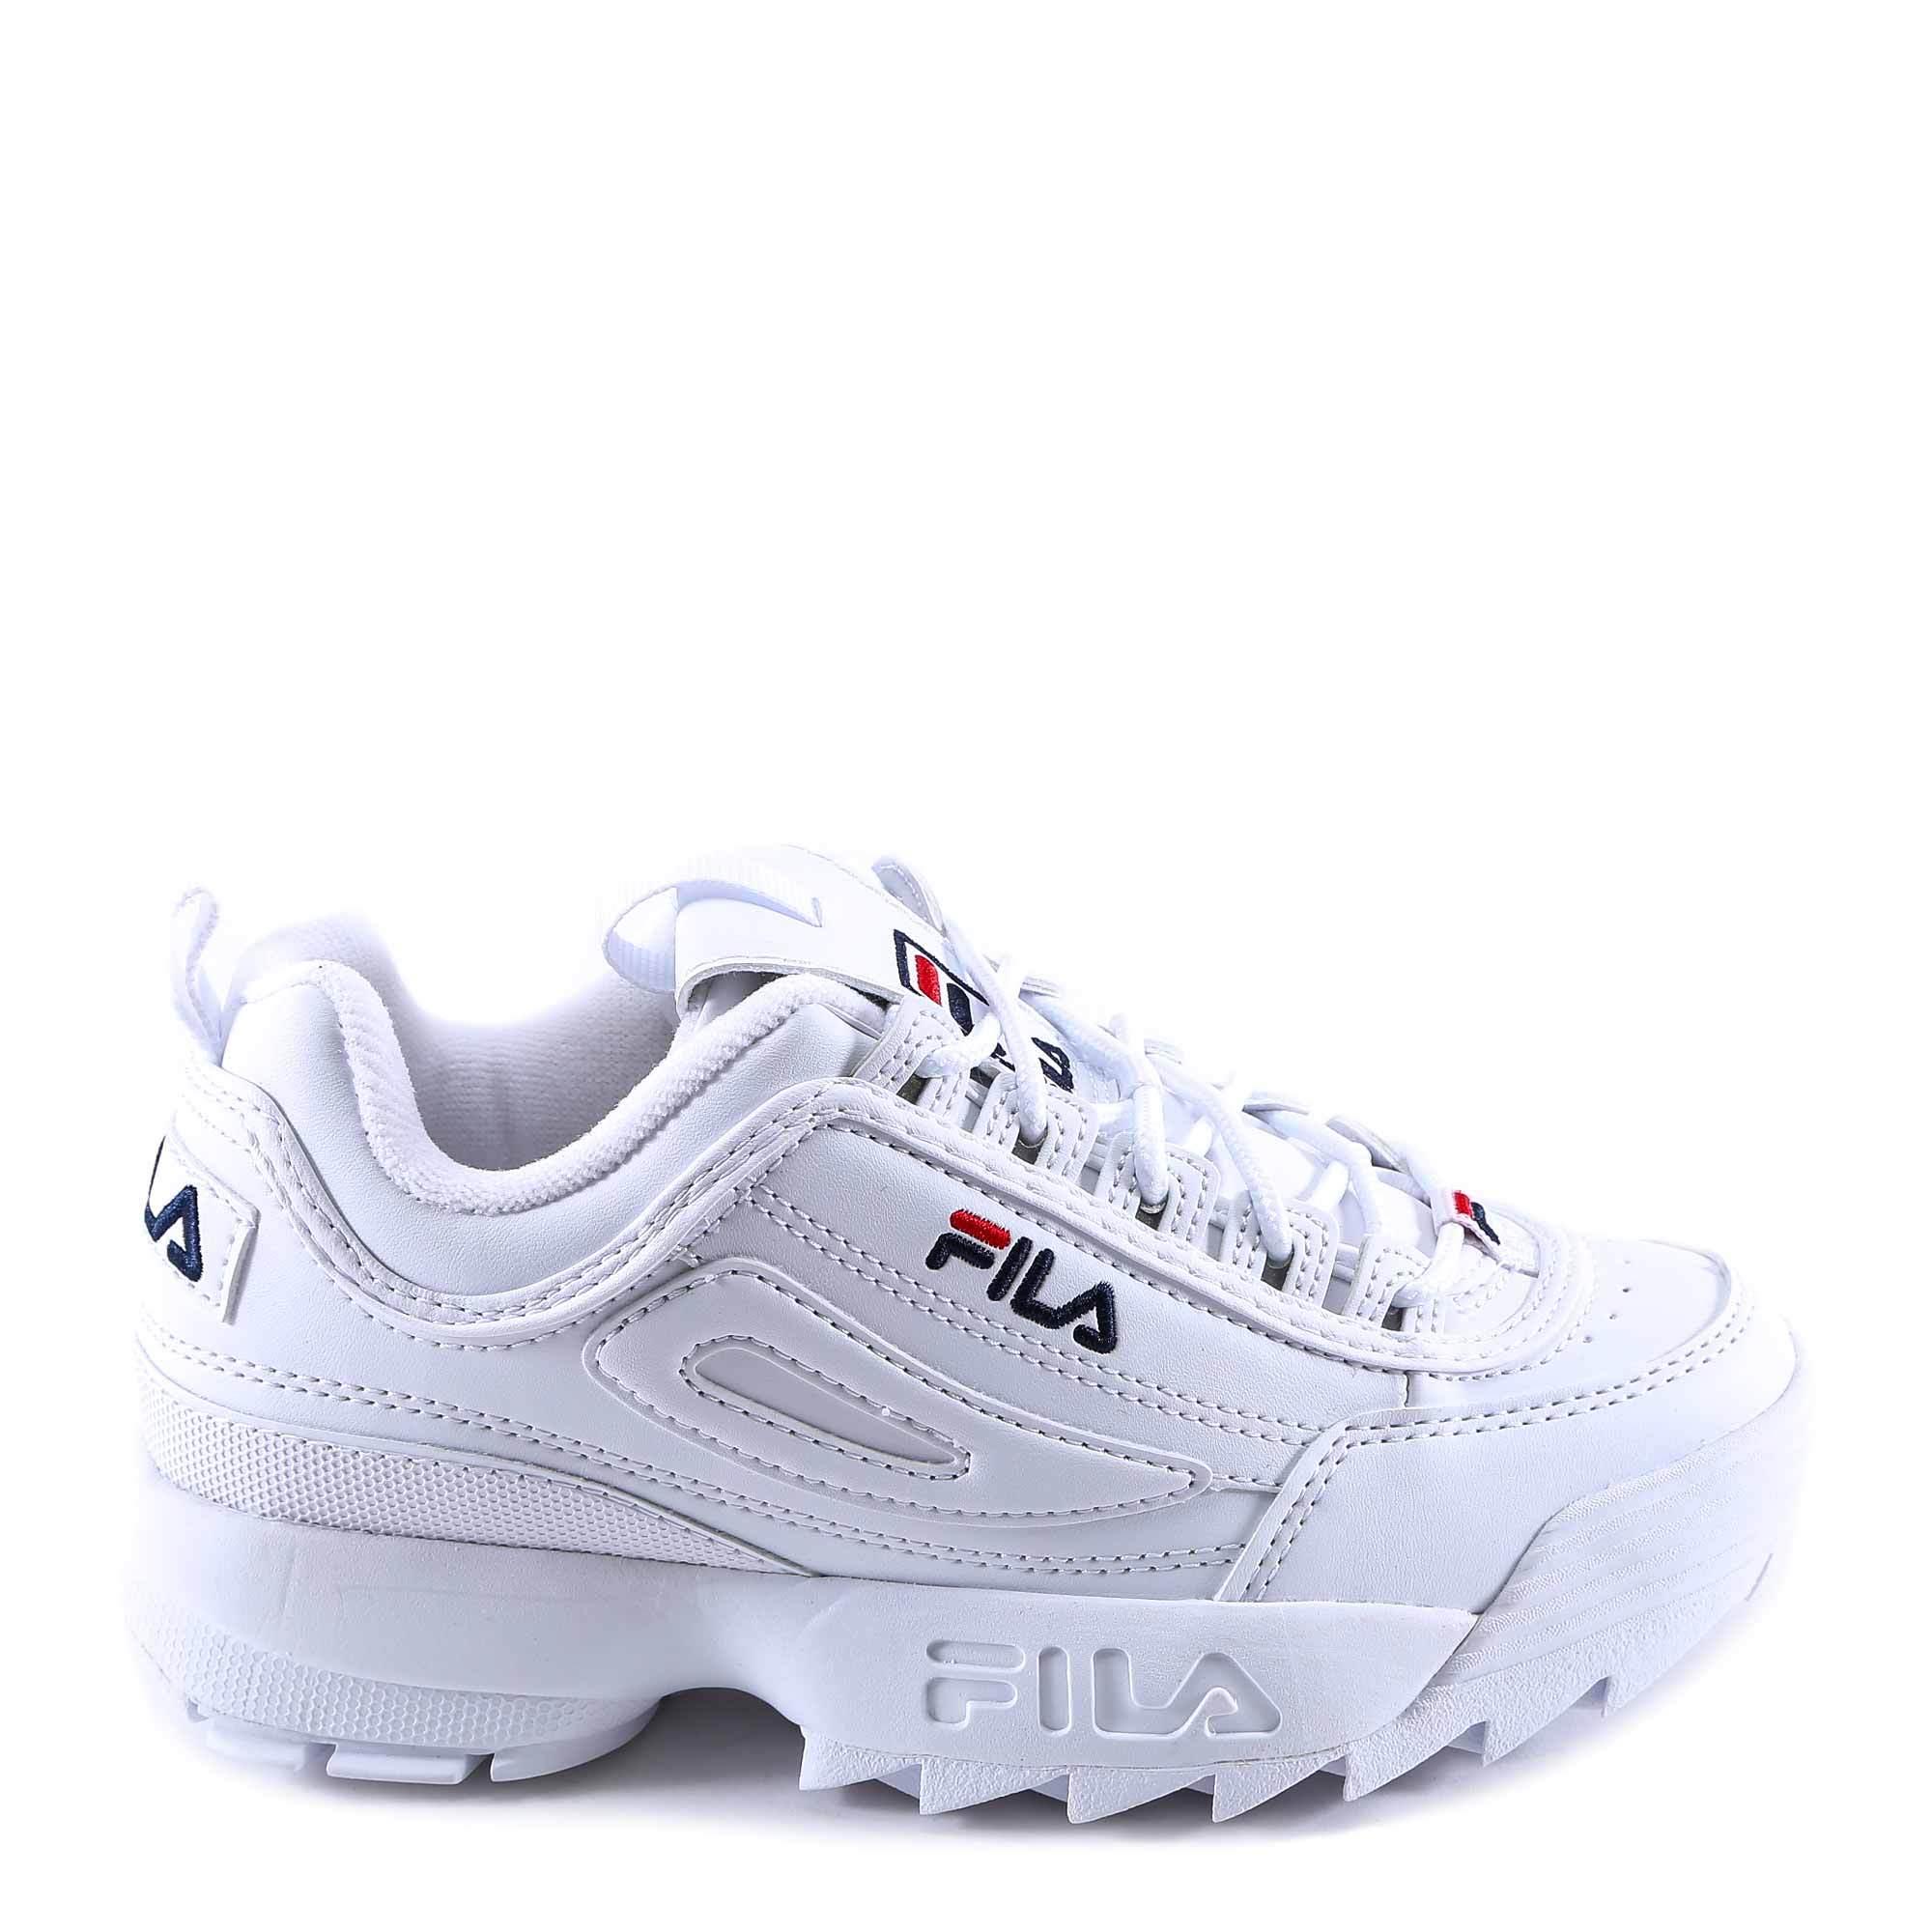 Fila Disruptor Low-top Sneakers in White - Lyst